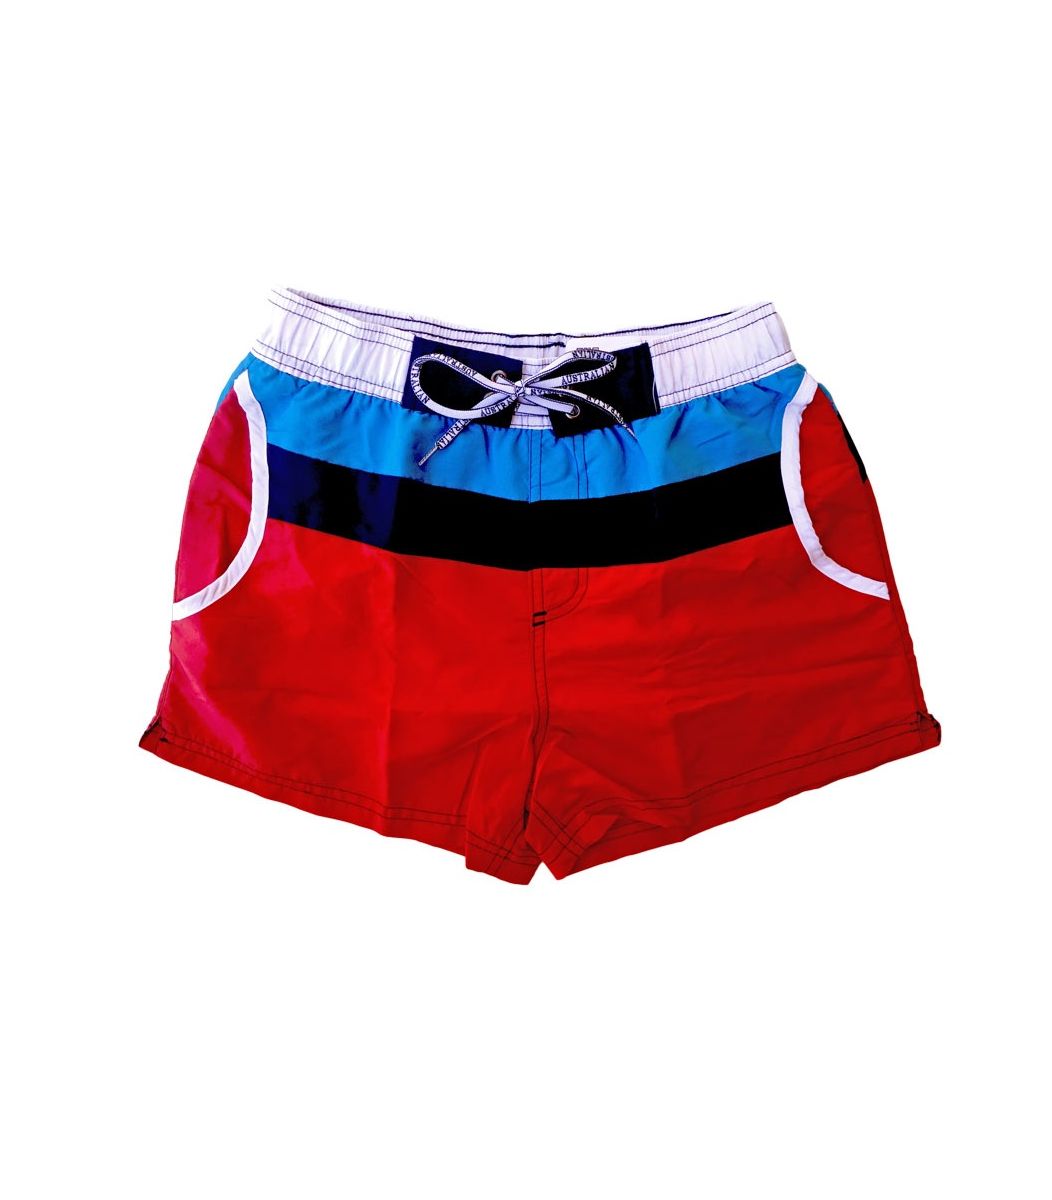 Men Swimwear, shorts, red